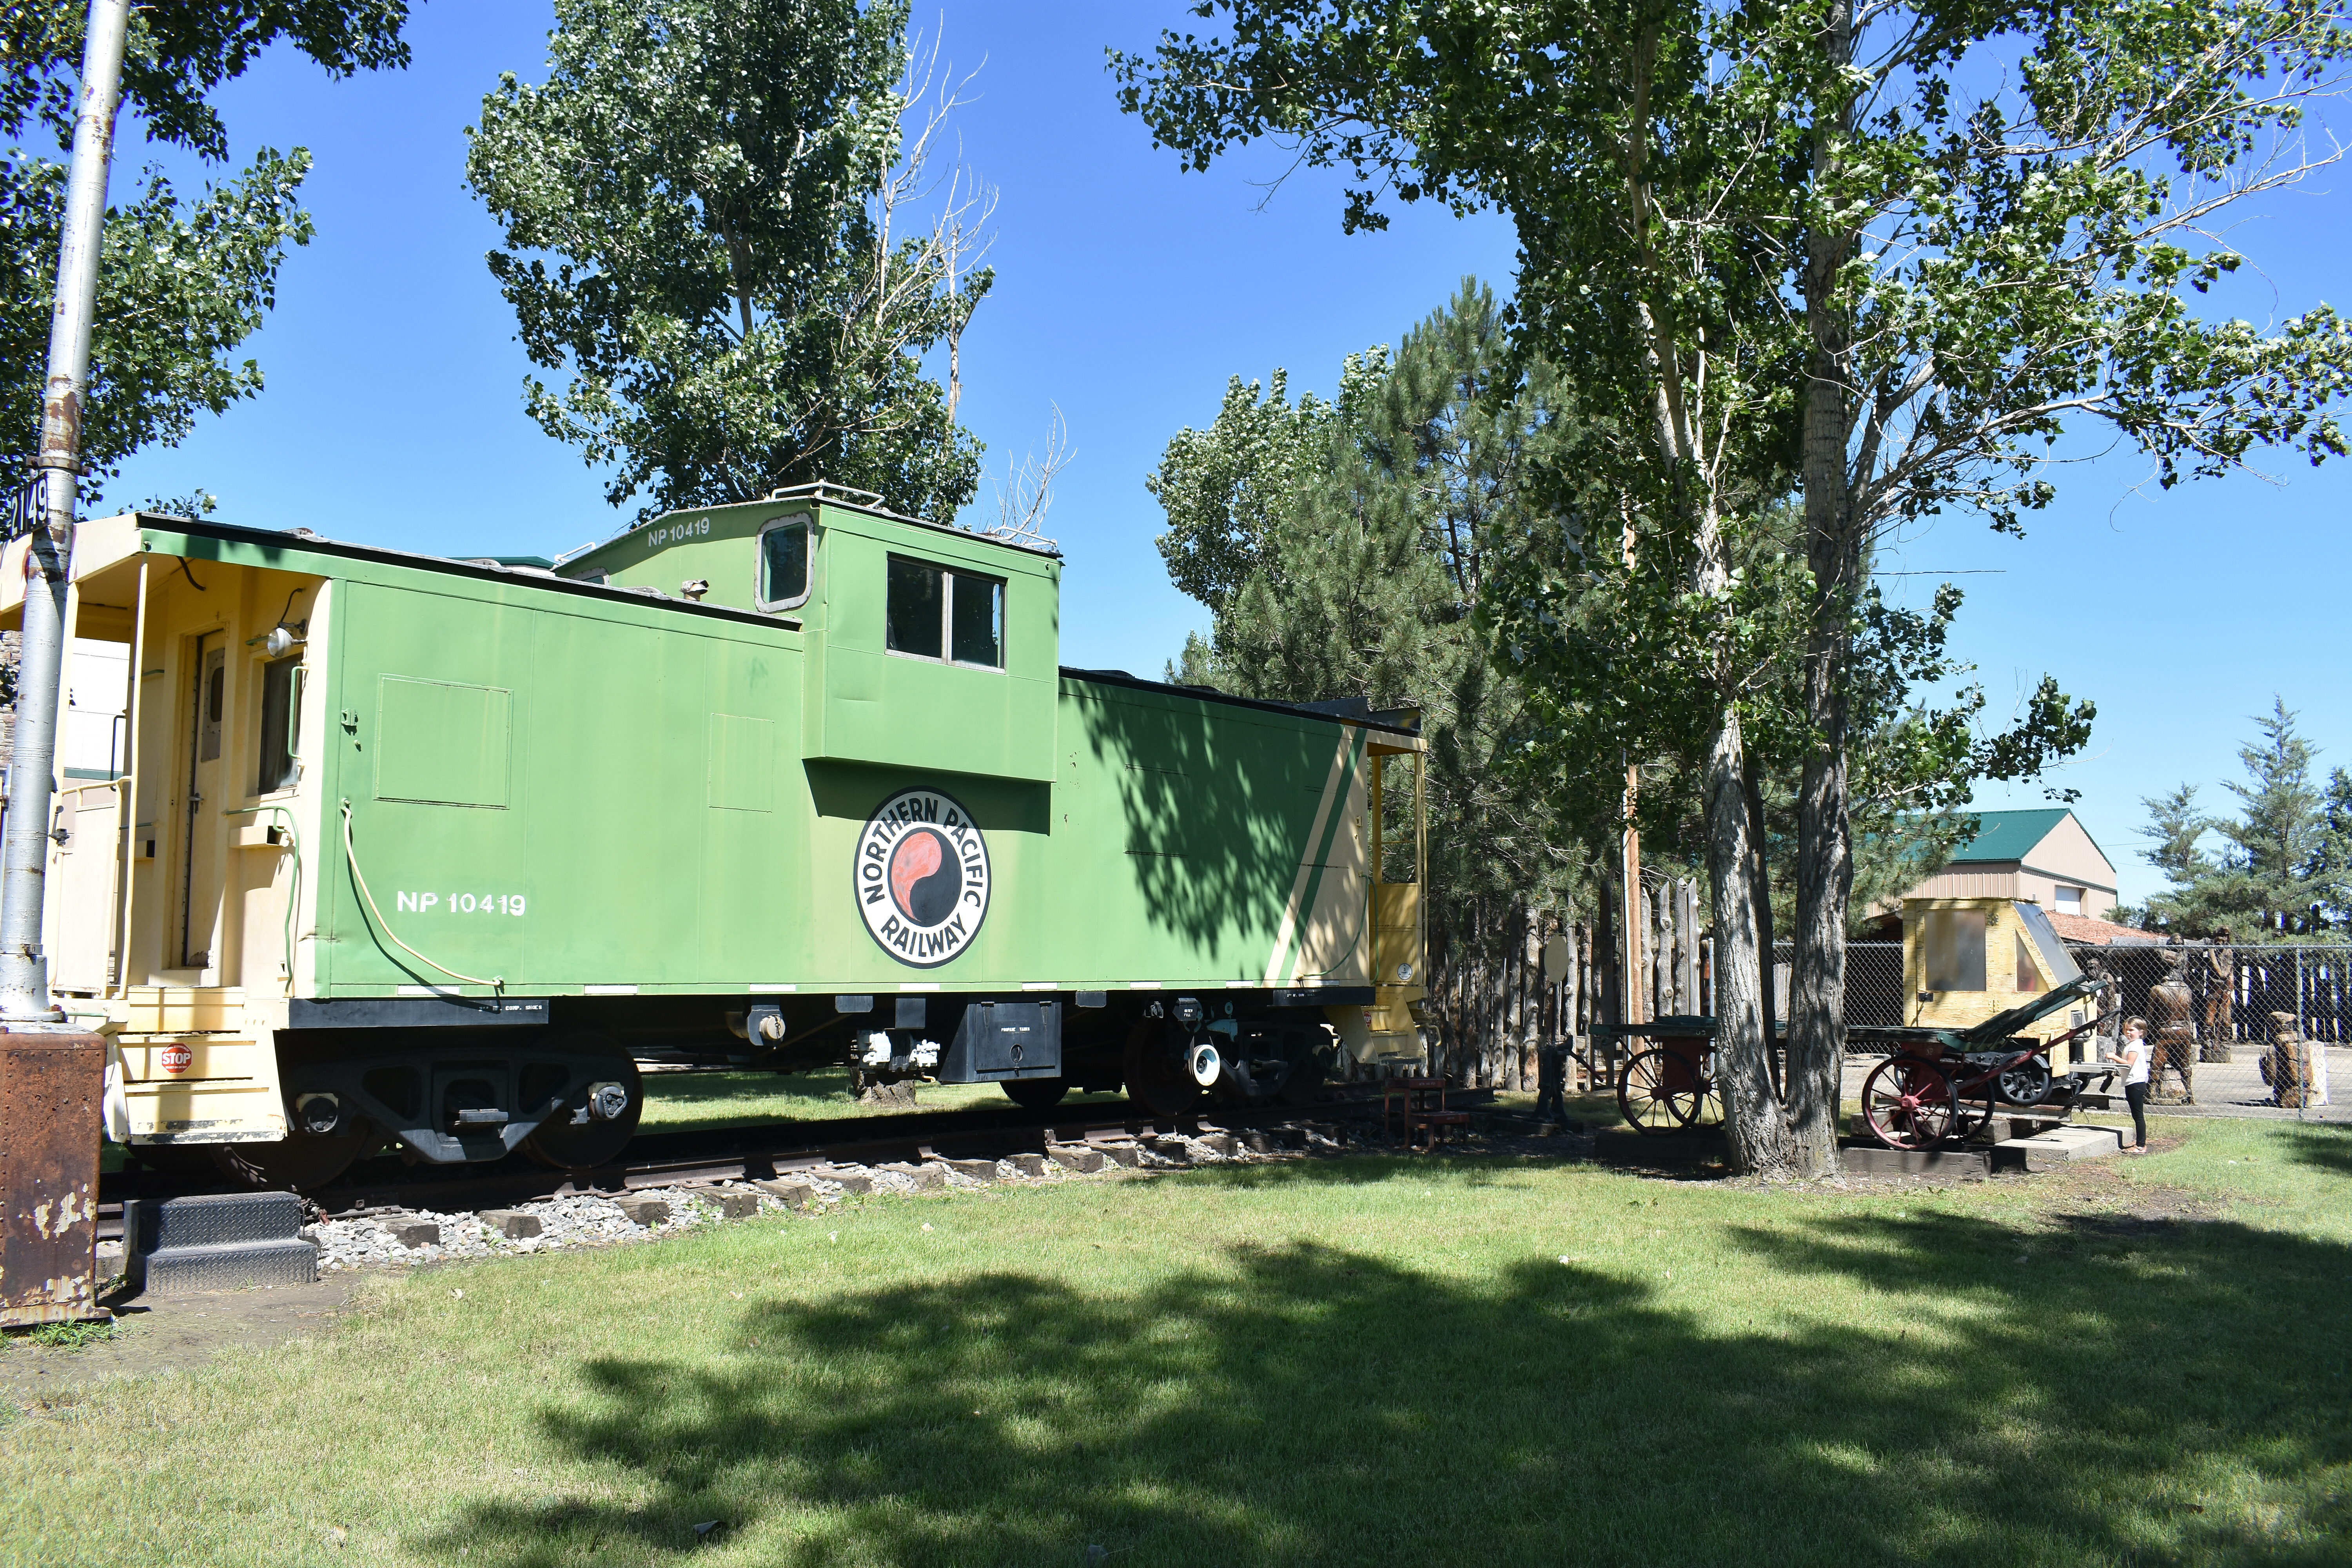 Northern Pacific Railroad caboose